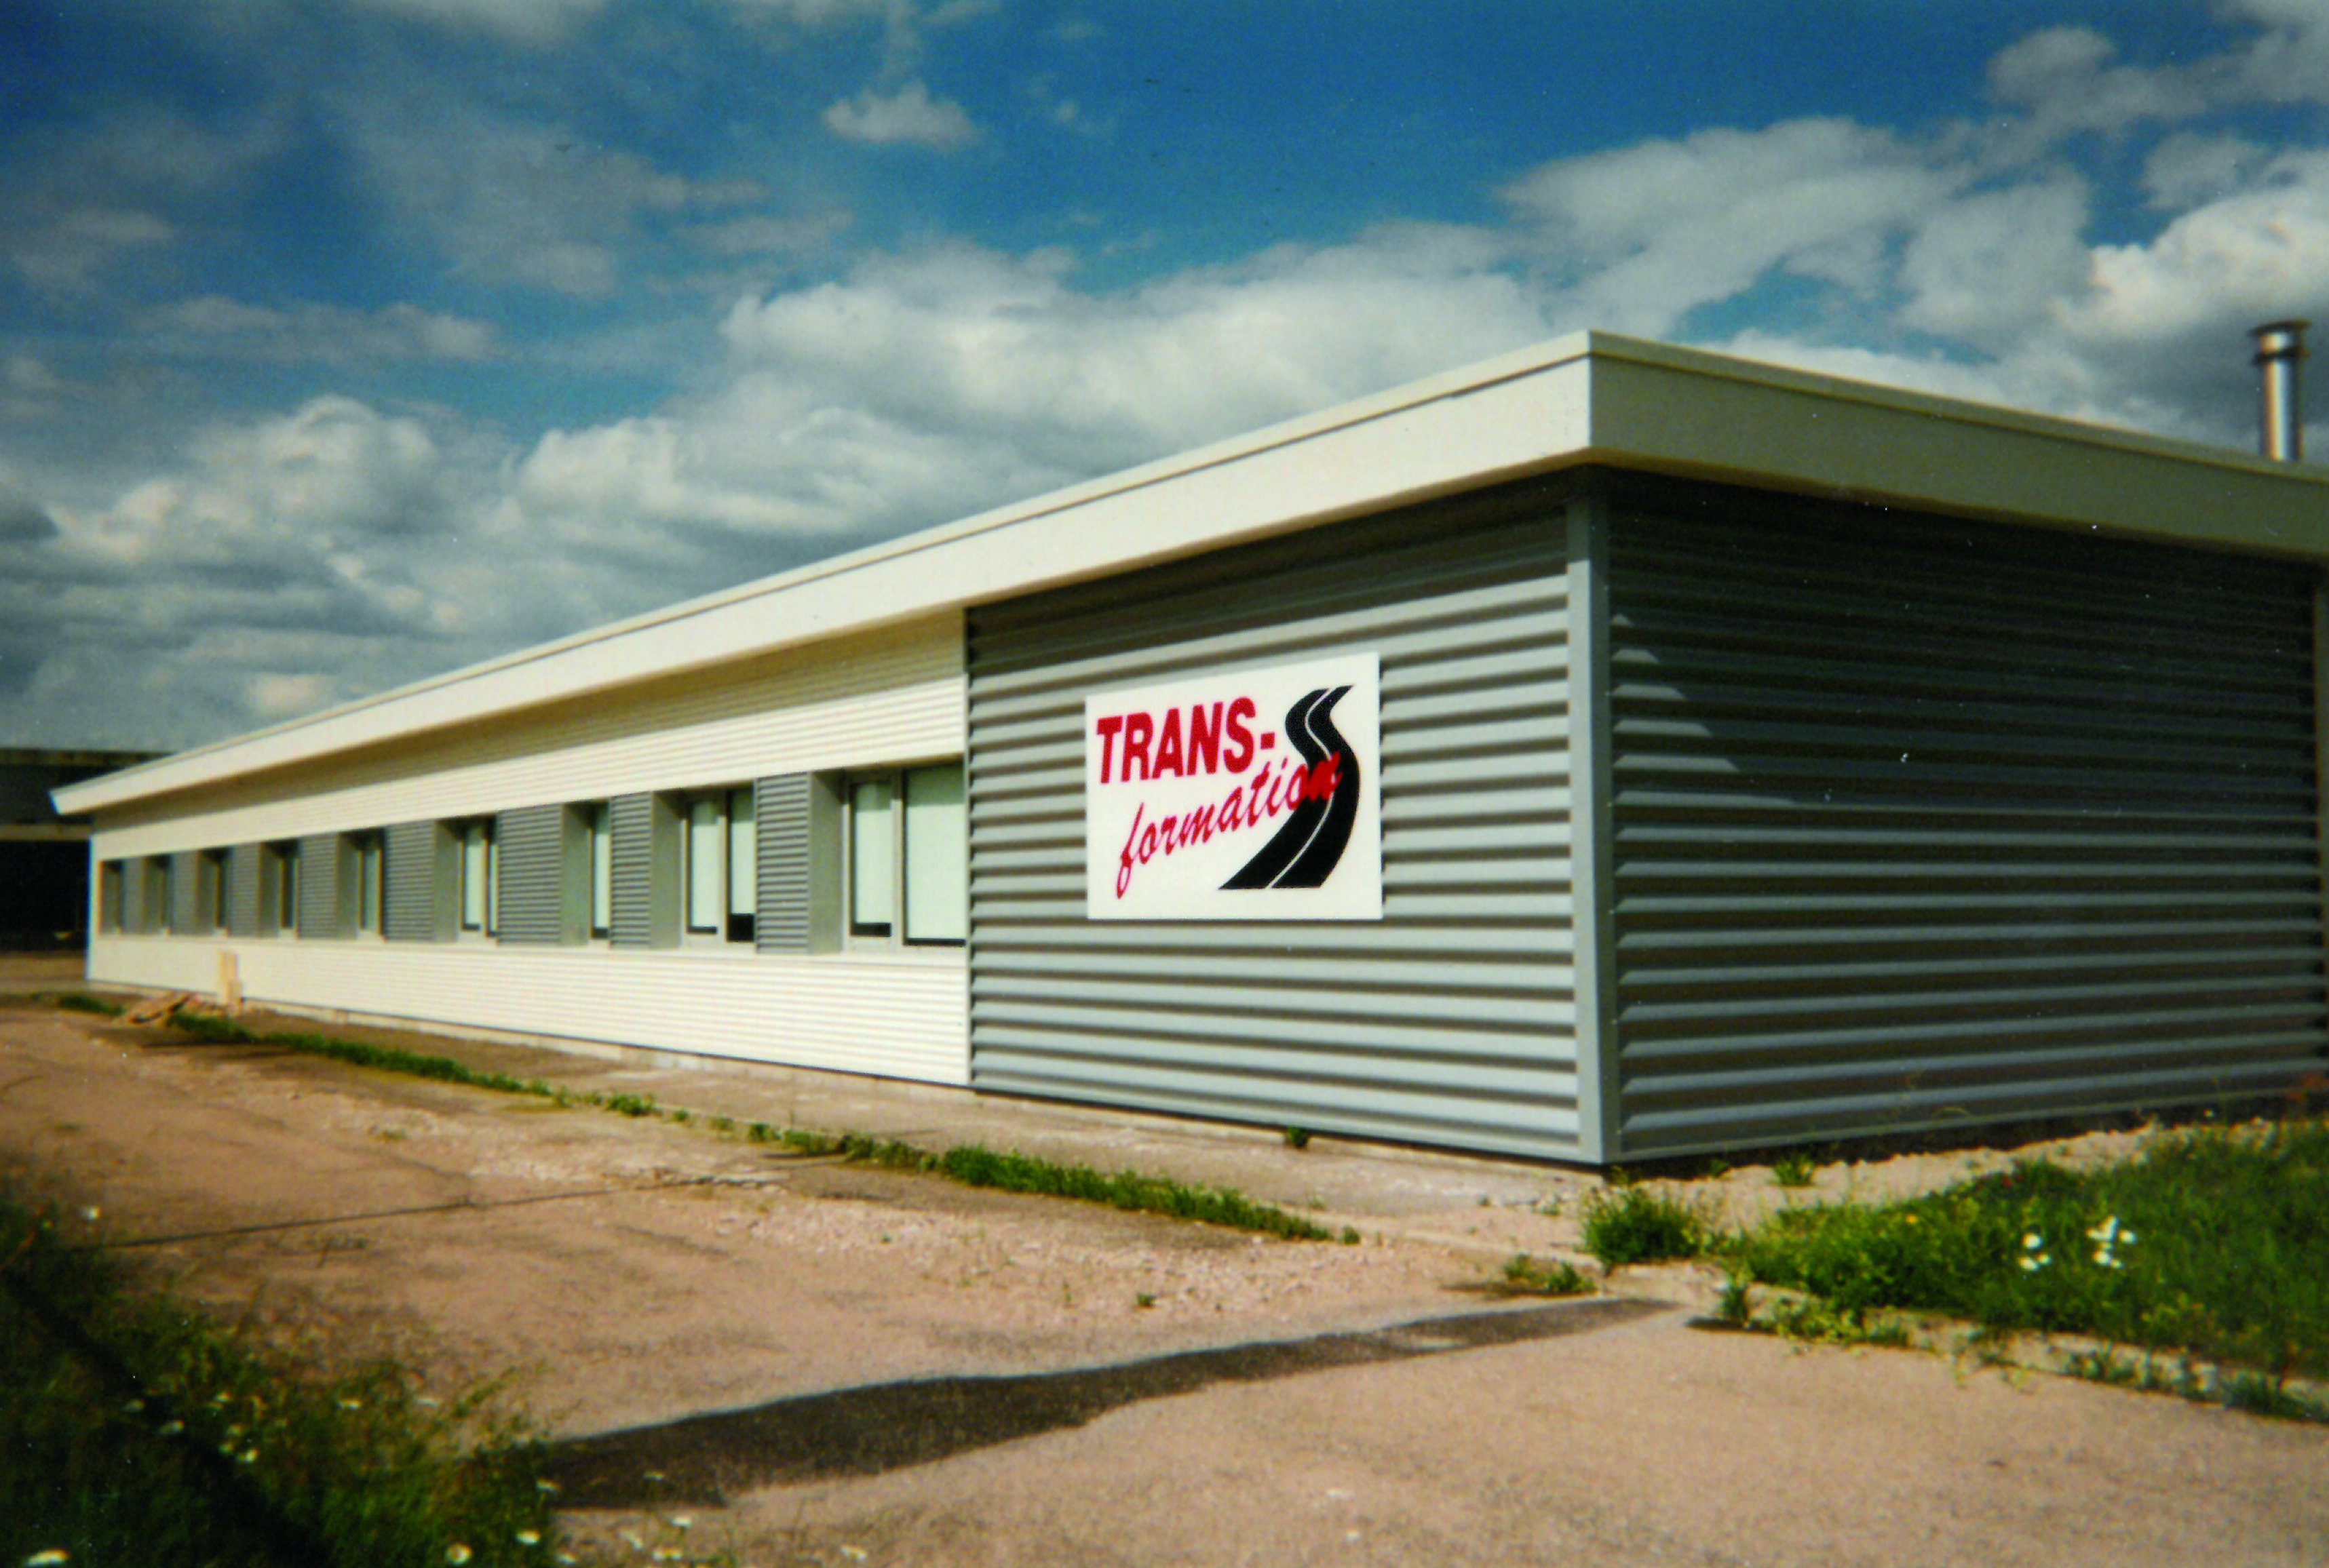 Groupe-Mauffrey-notre-histoire-trans-formation-juin-1999